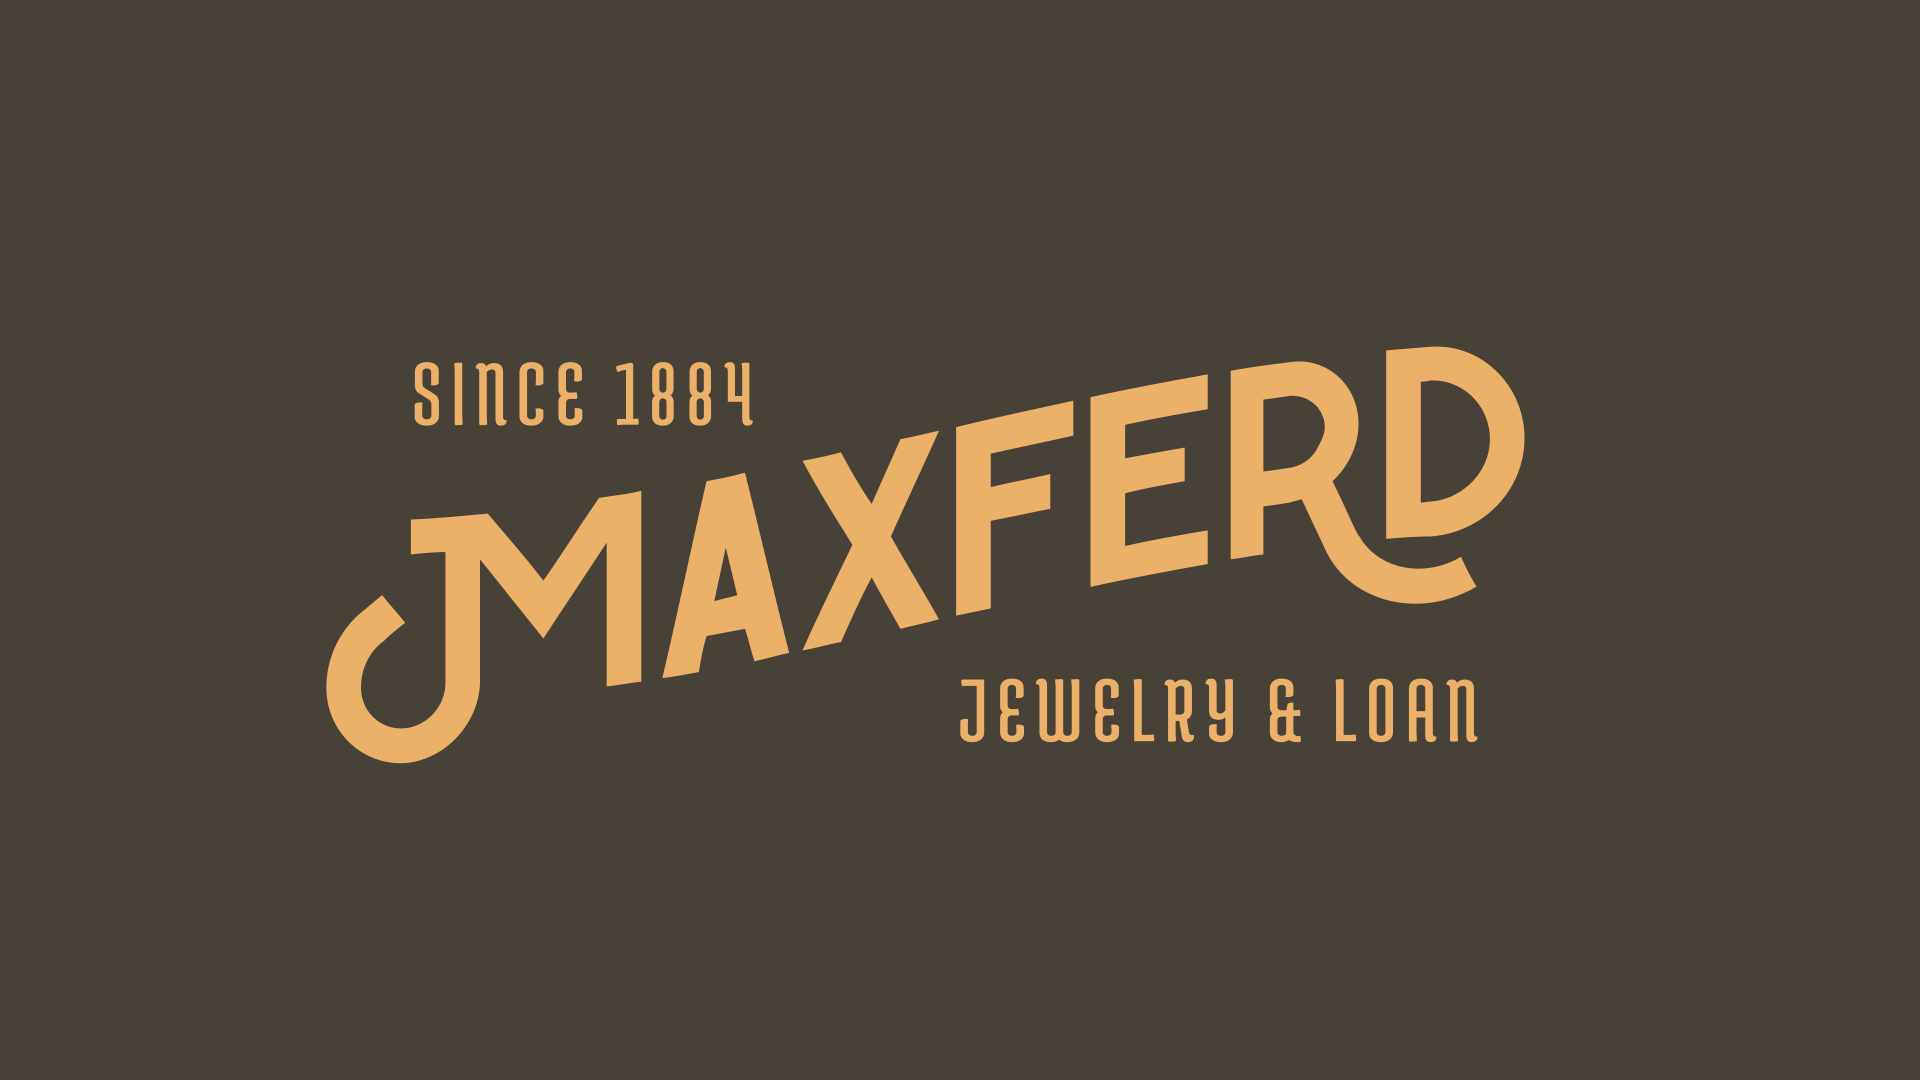 Maxferd Jewelry & Loan's Latest Blog Post Differentiates Between Precious Stones & Semi-Precious Stones